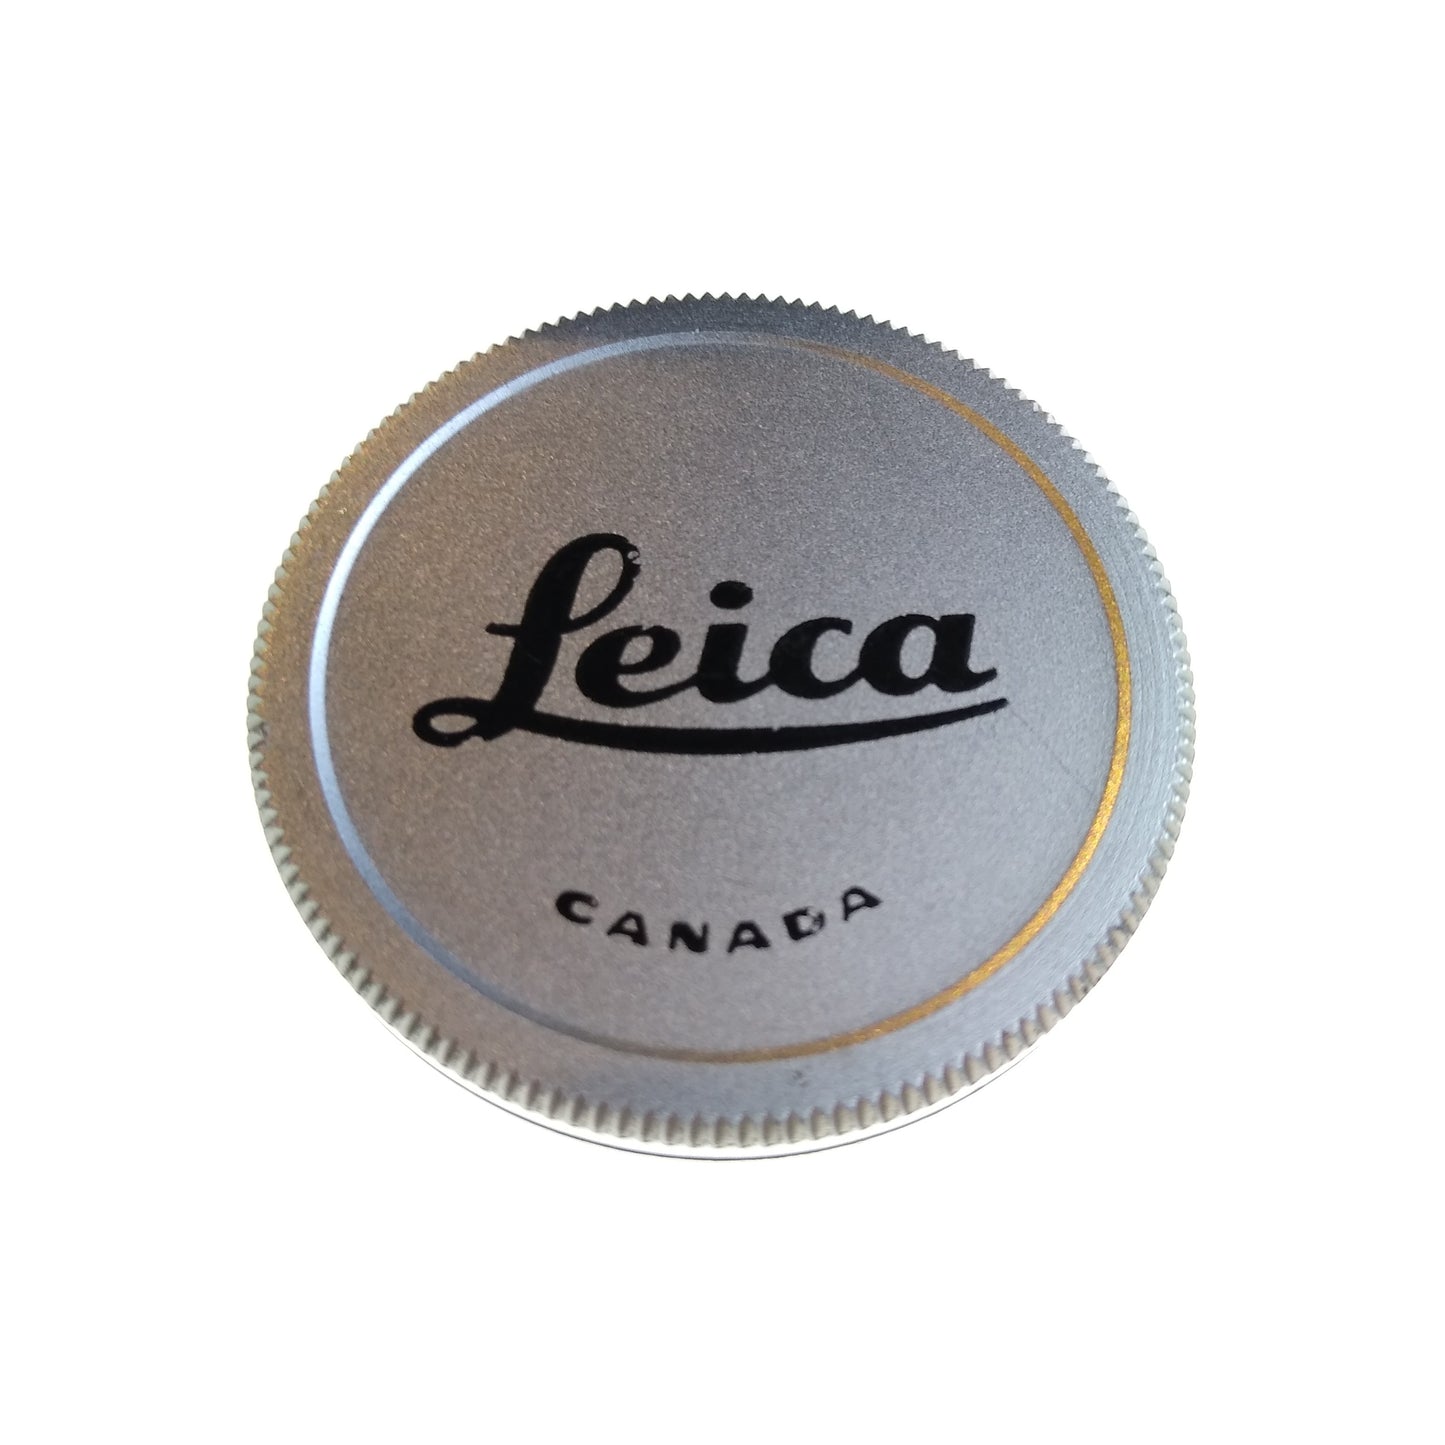 Leitz Canada 39mm front lens cap.